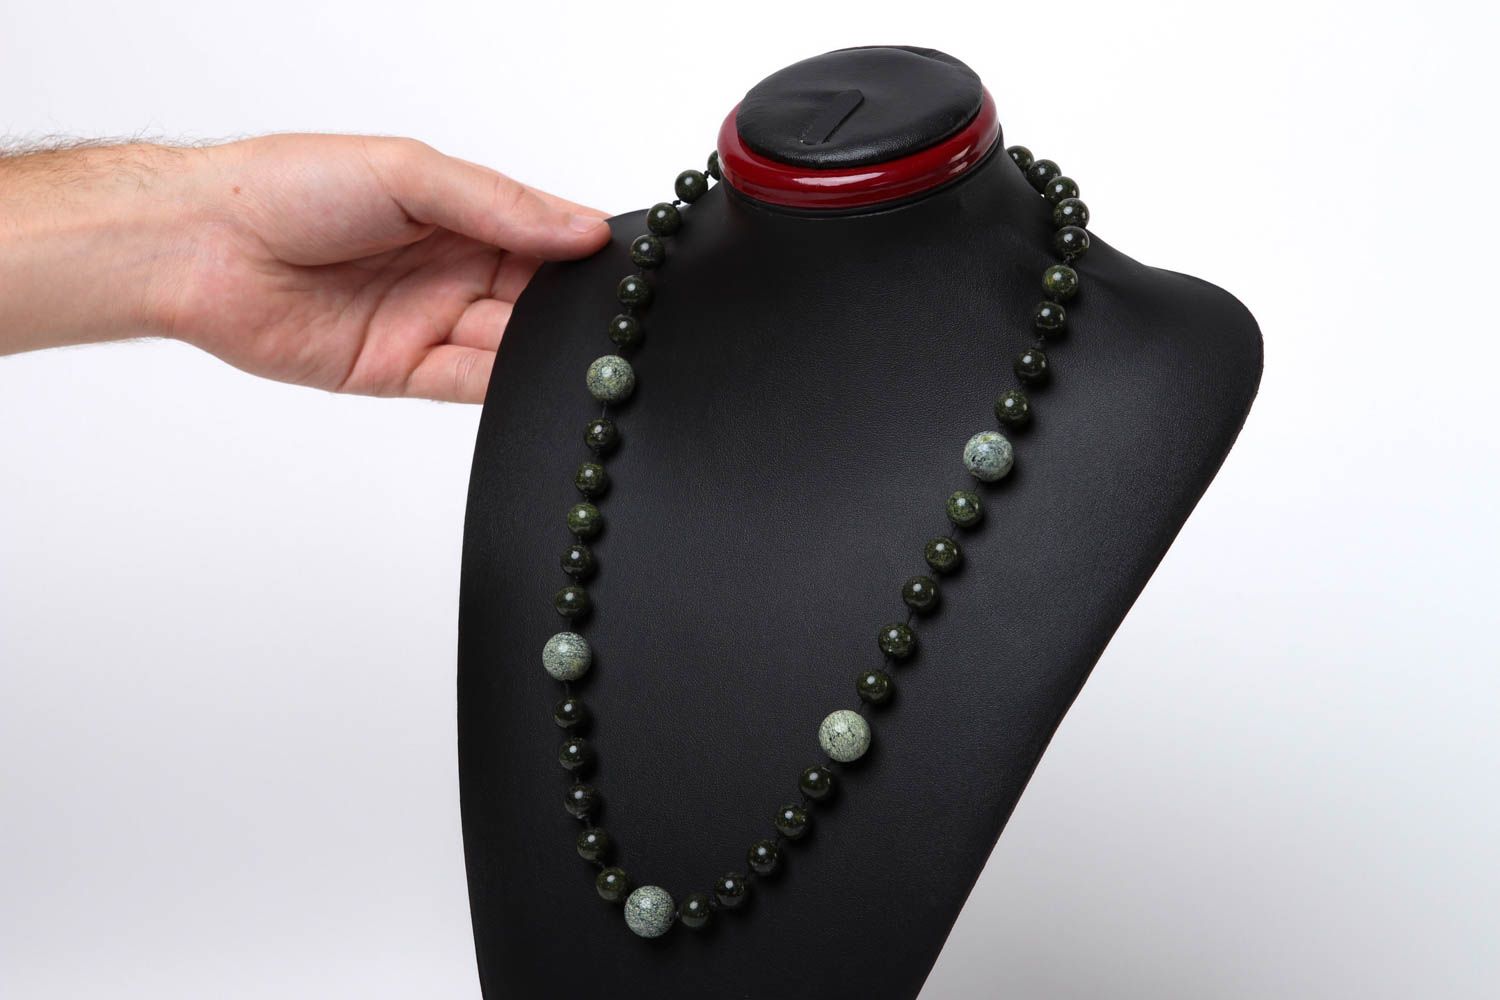 Handmade jewelry designer bead necklace neck accessory stone jewelry gift ideas photo 5